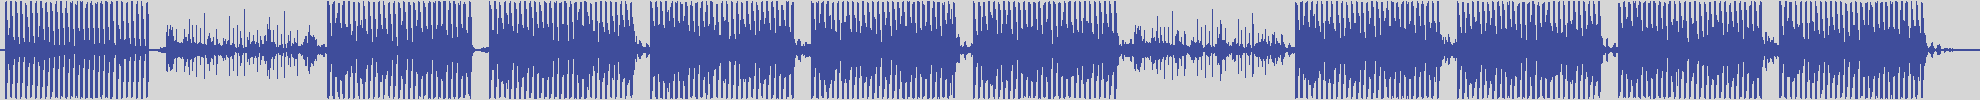 atomic_recordings [AR007] Don Conte - Plus Reality [The Castle Mix] audio wave form